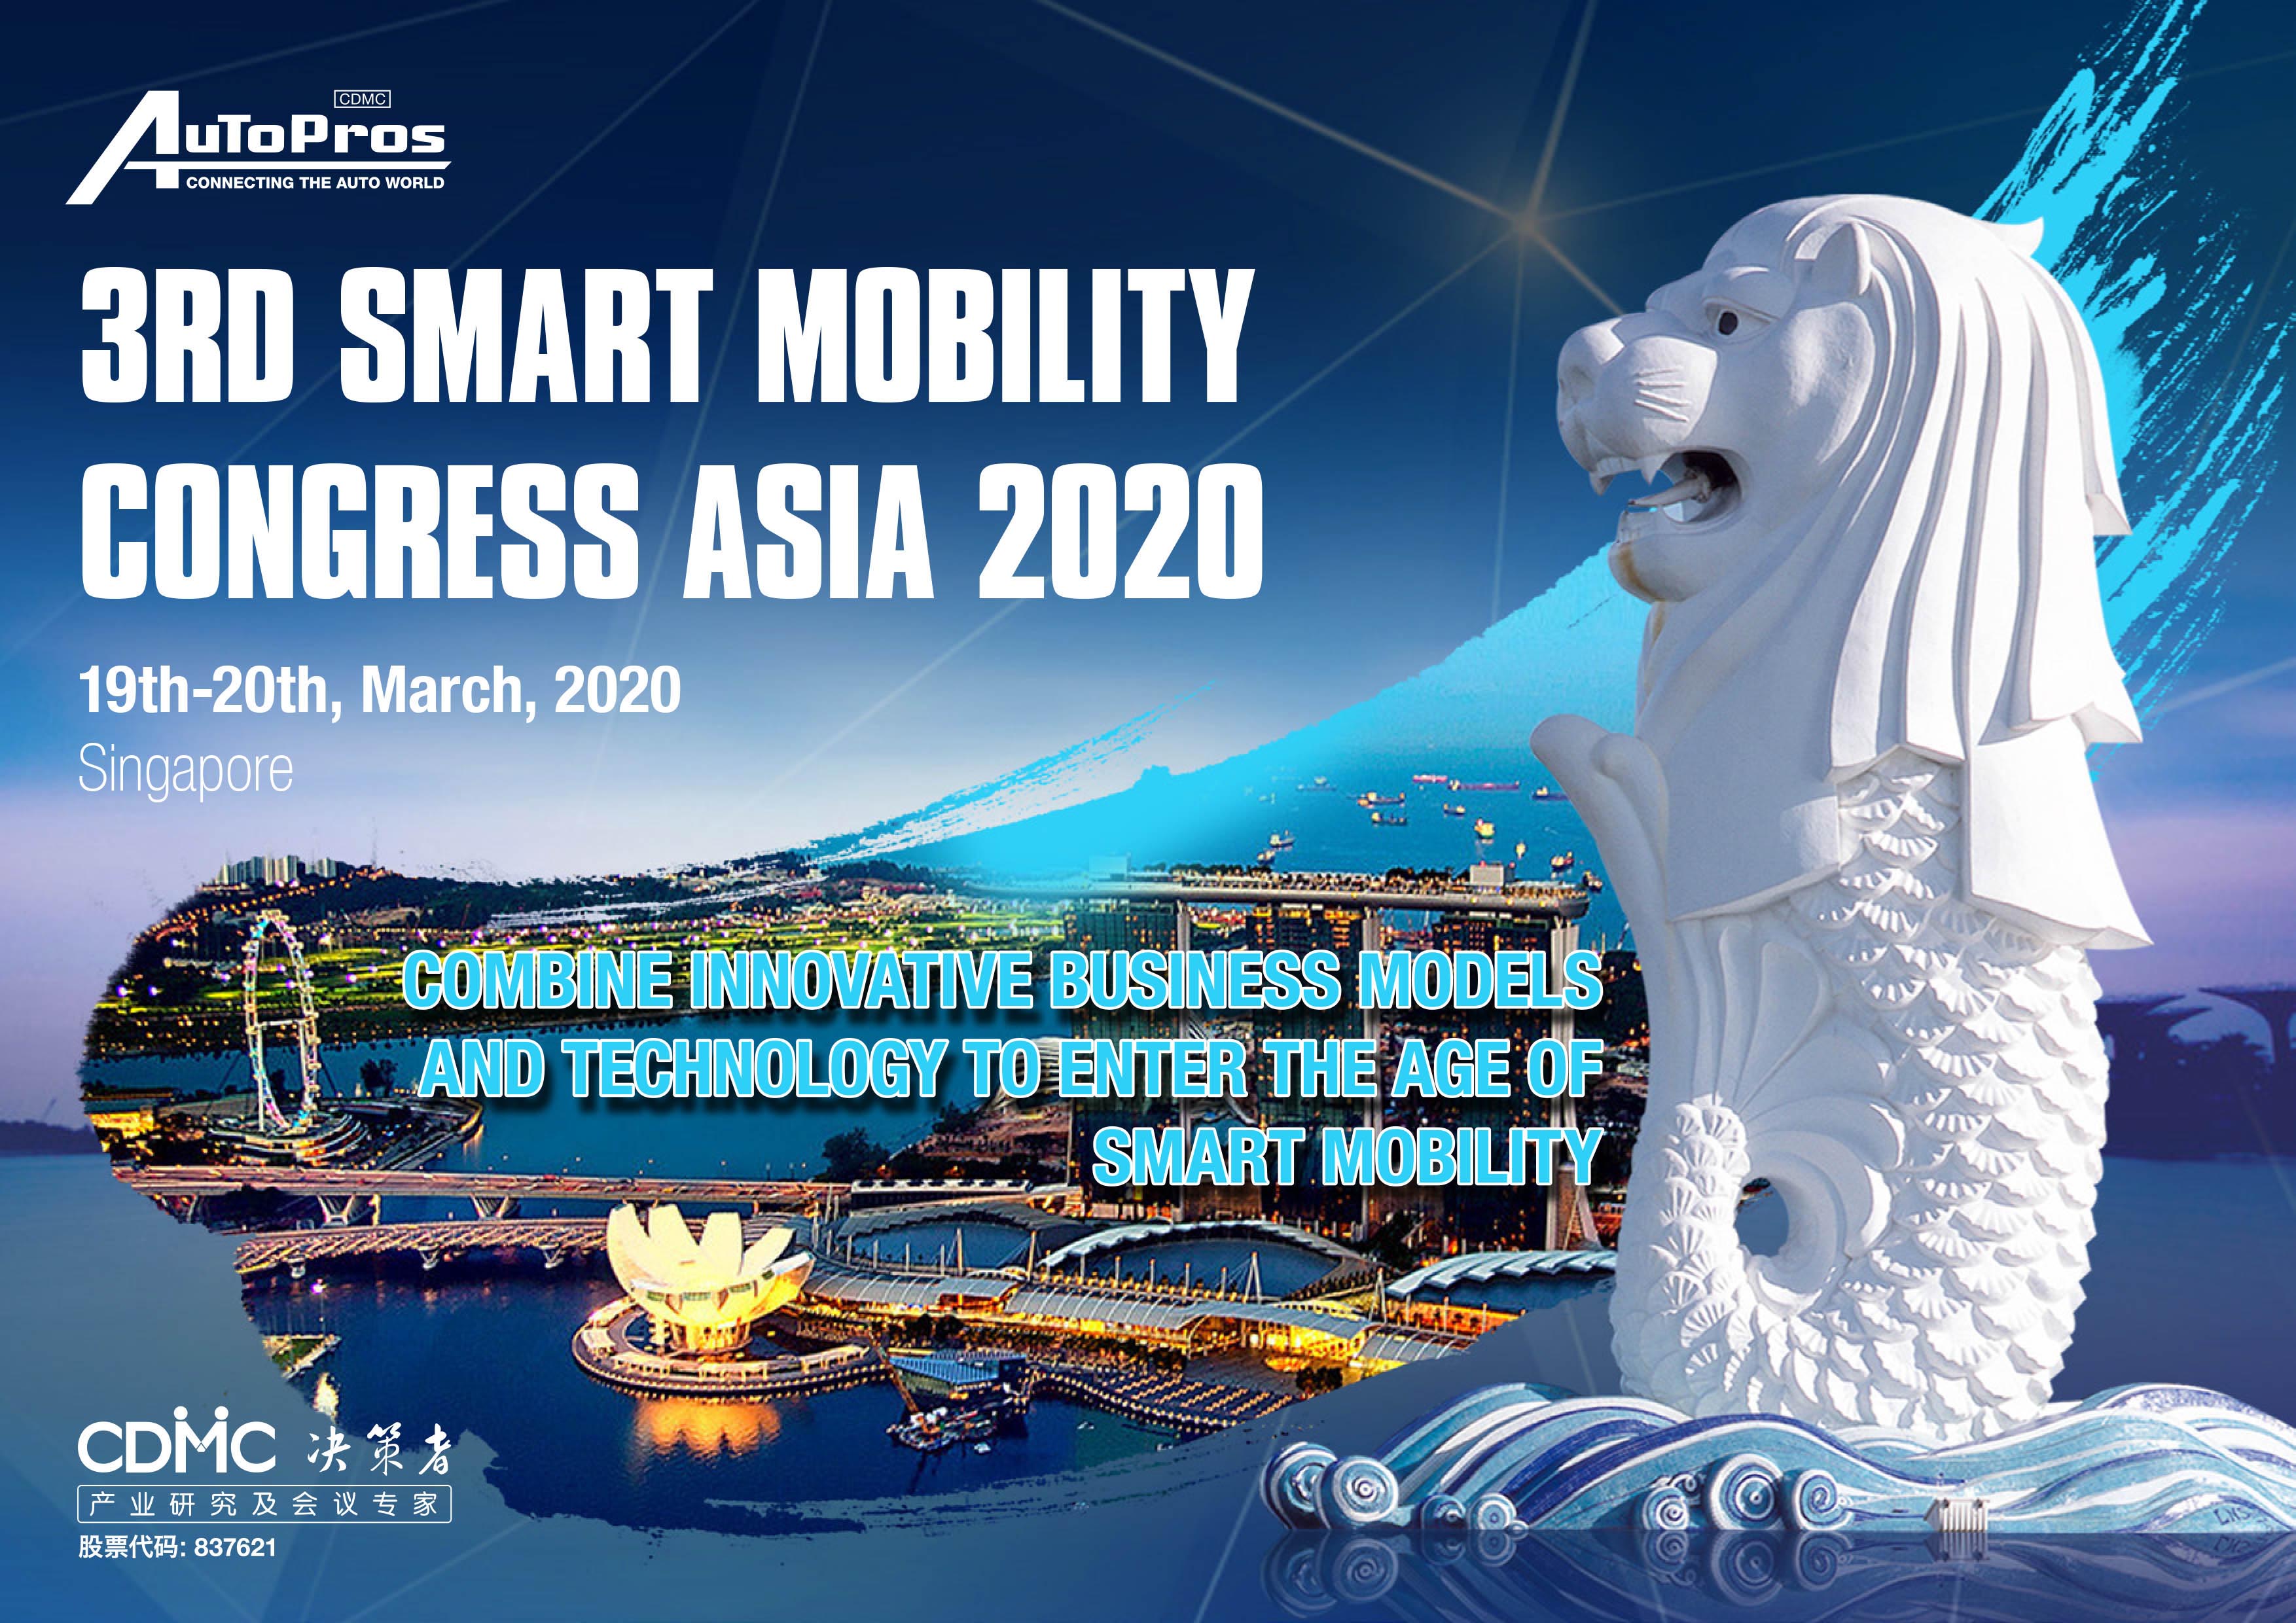 3rd Smart Mobility Congress Asia 2020 organized by Shanghai CDMC Group